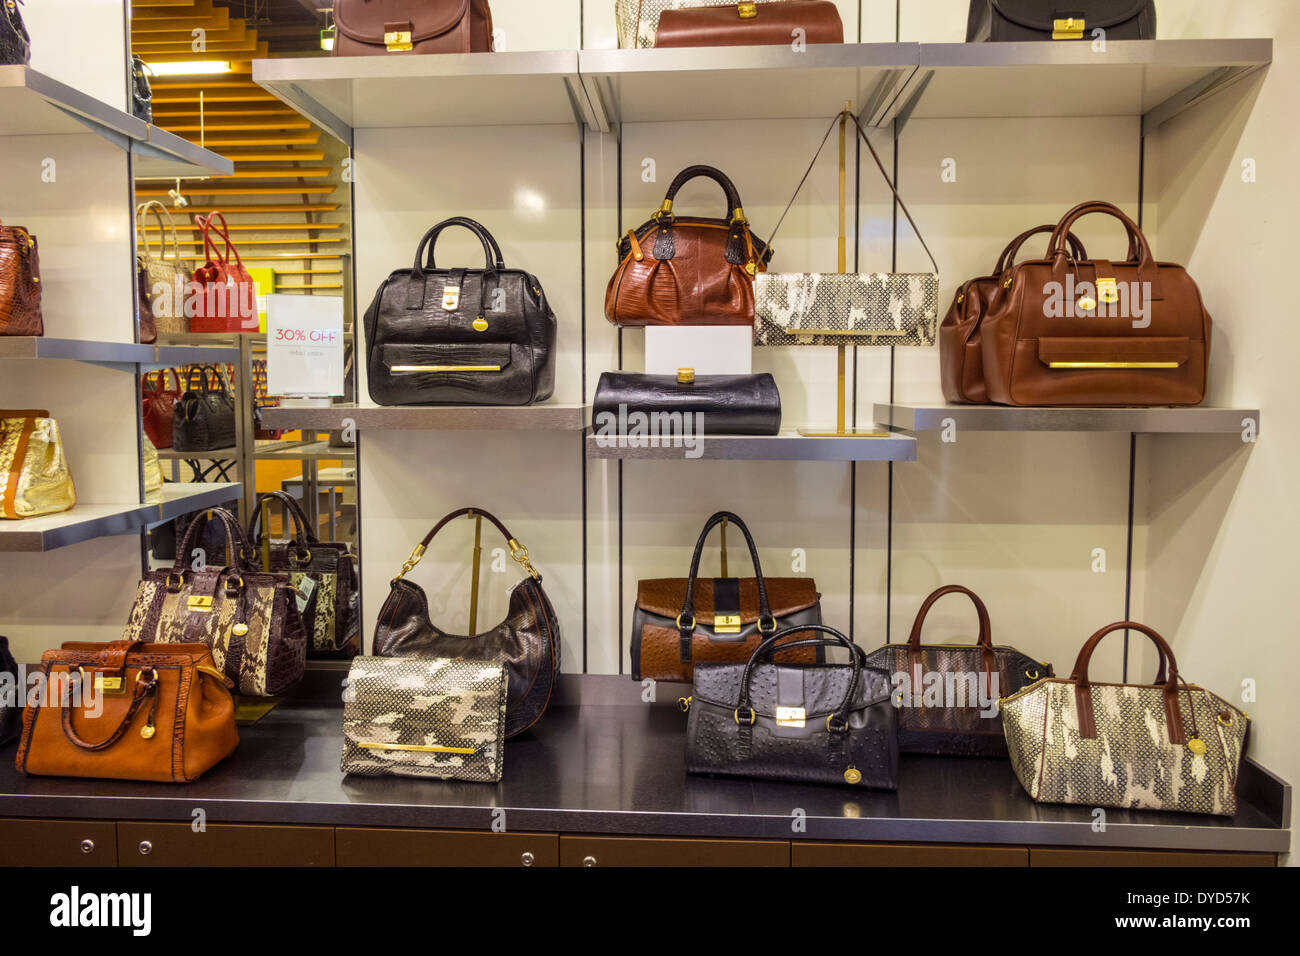 Brahmin Handbags in a Department Store Editorial Photo - Image of handbags,  department: 113511771